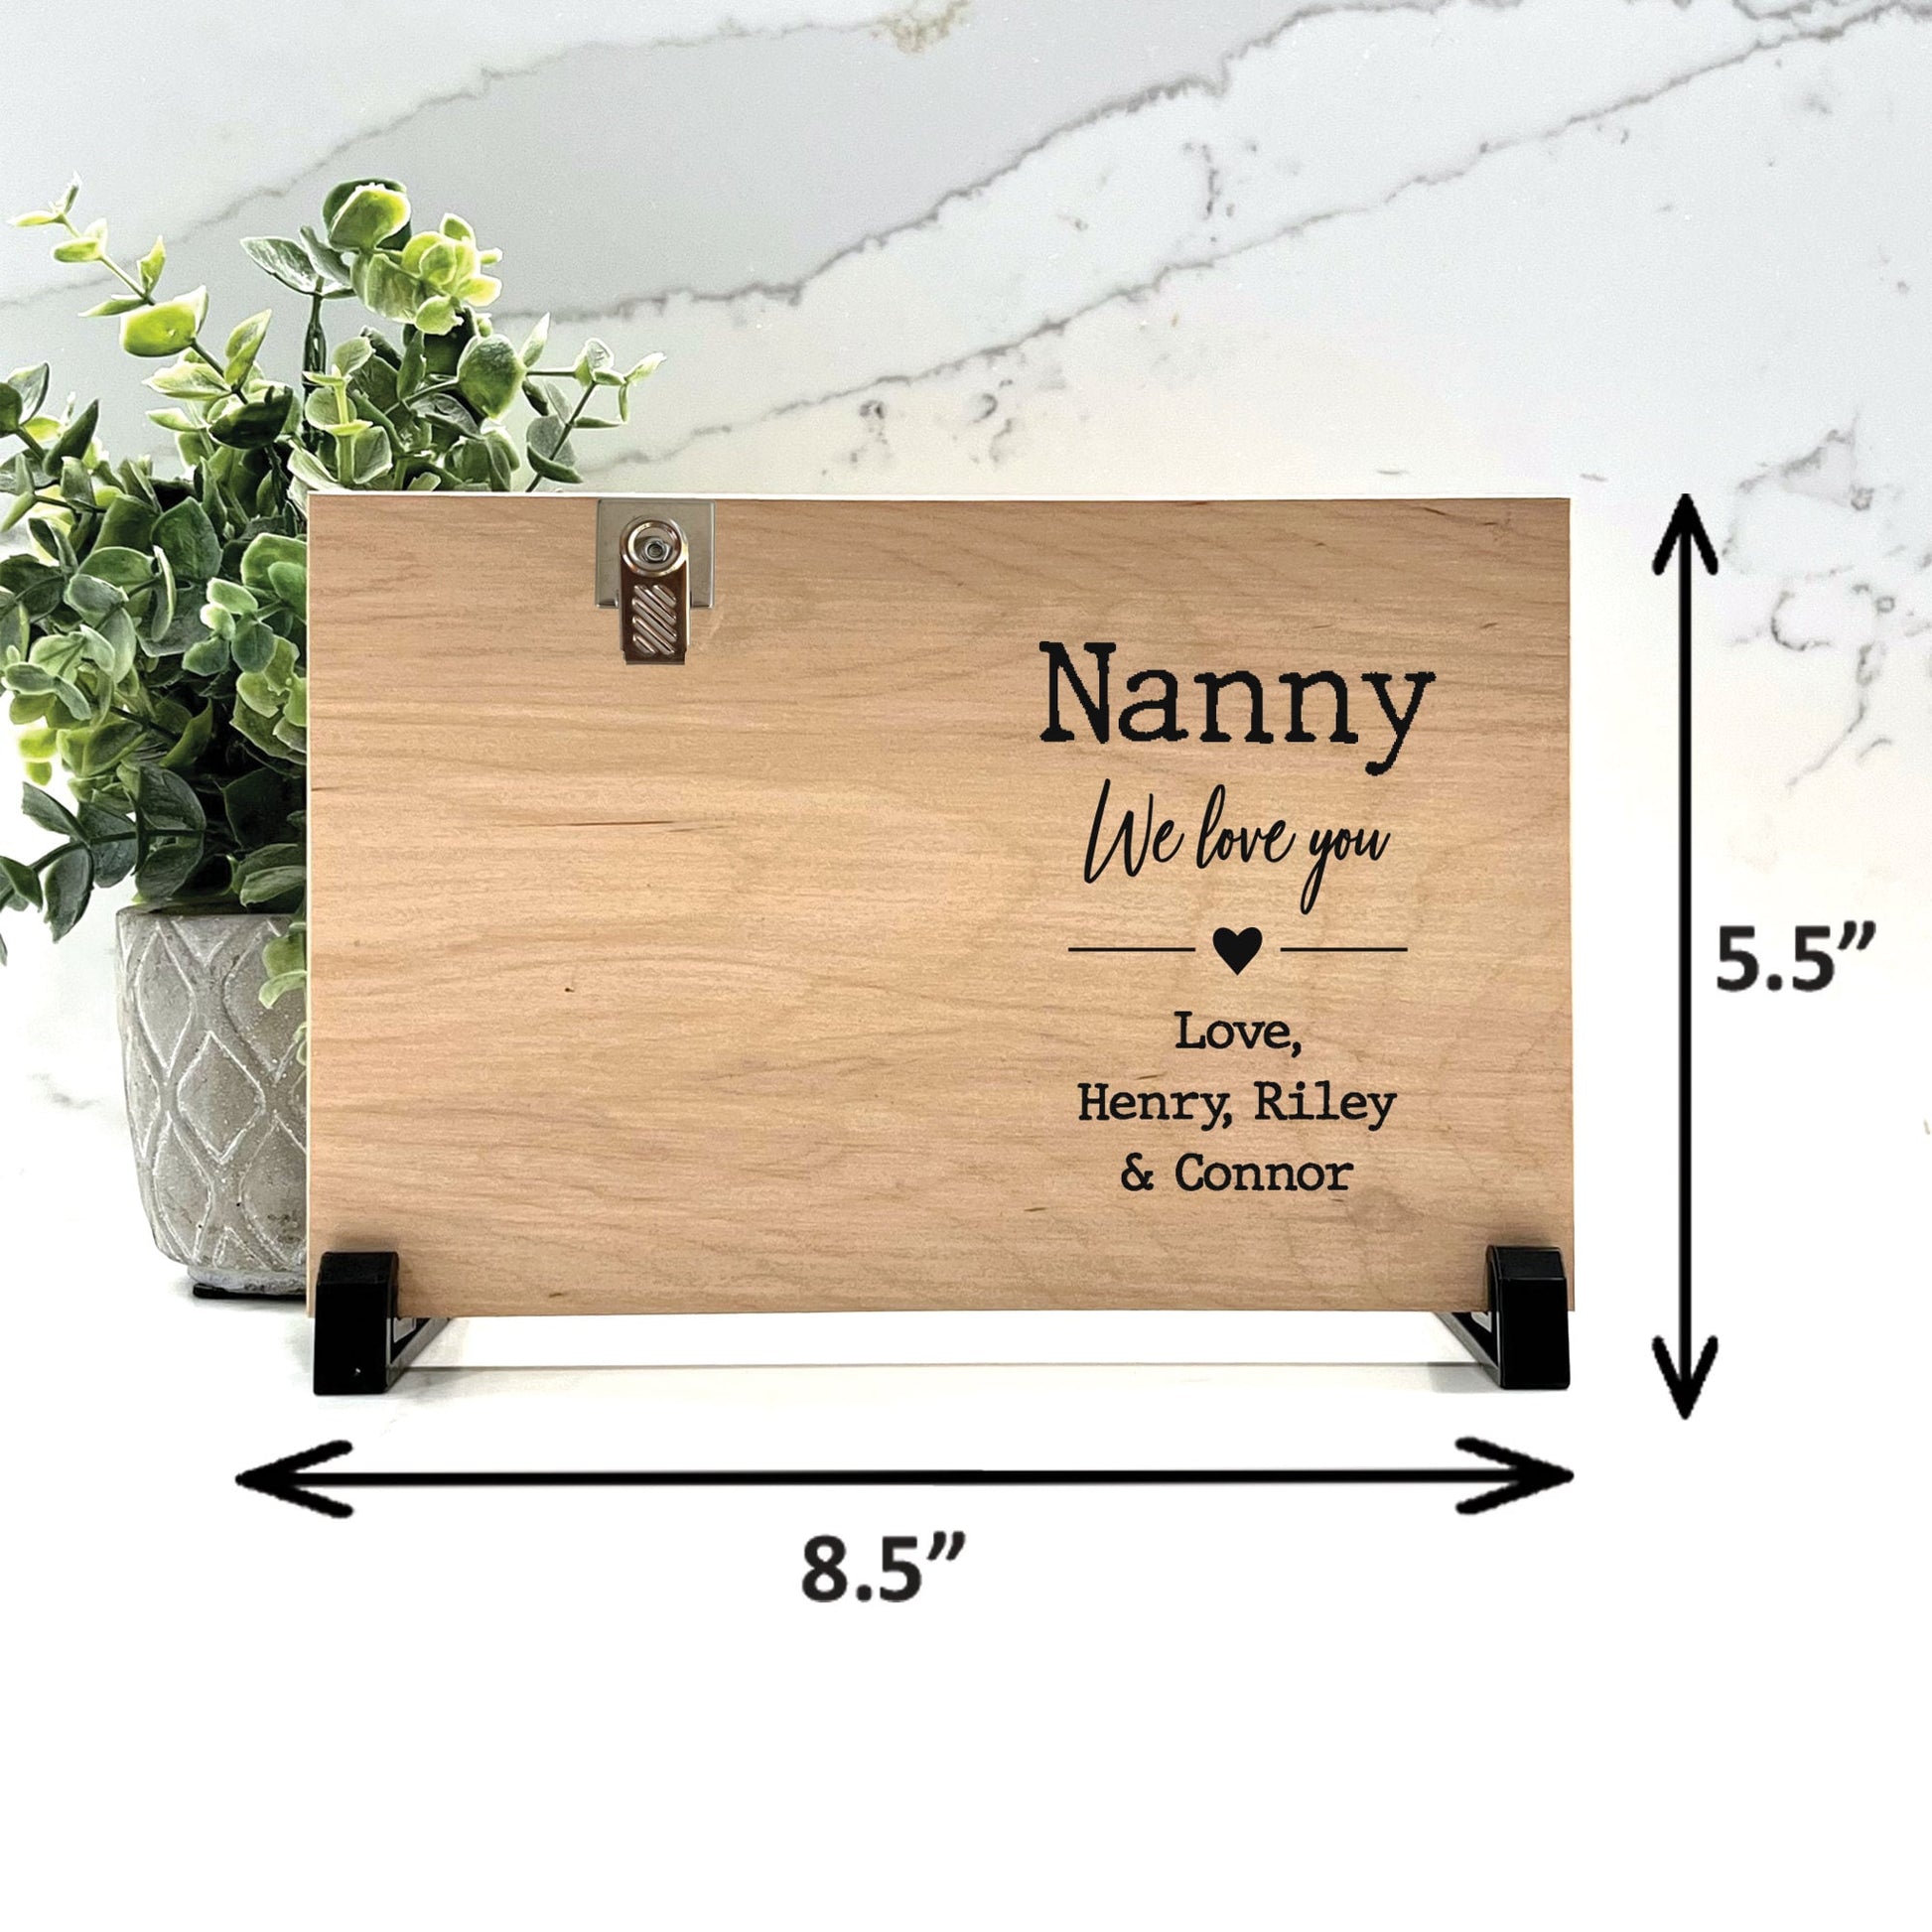 Nana Frame, Personalized Frame, Personalized Gift for Nana, Nanny, Grandma, Personalized Wood Frame with grandchildren's names